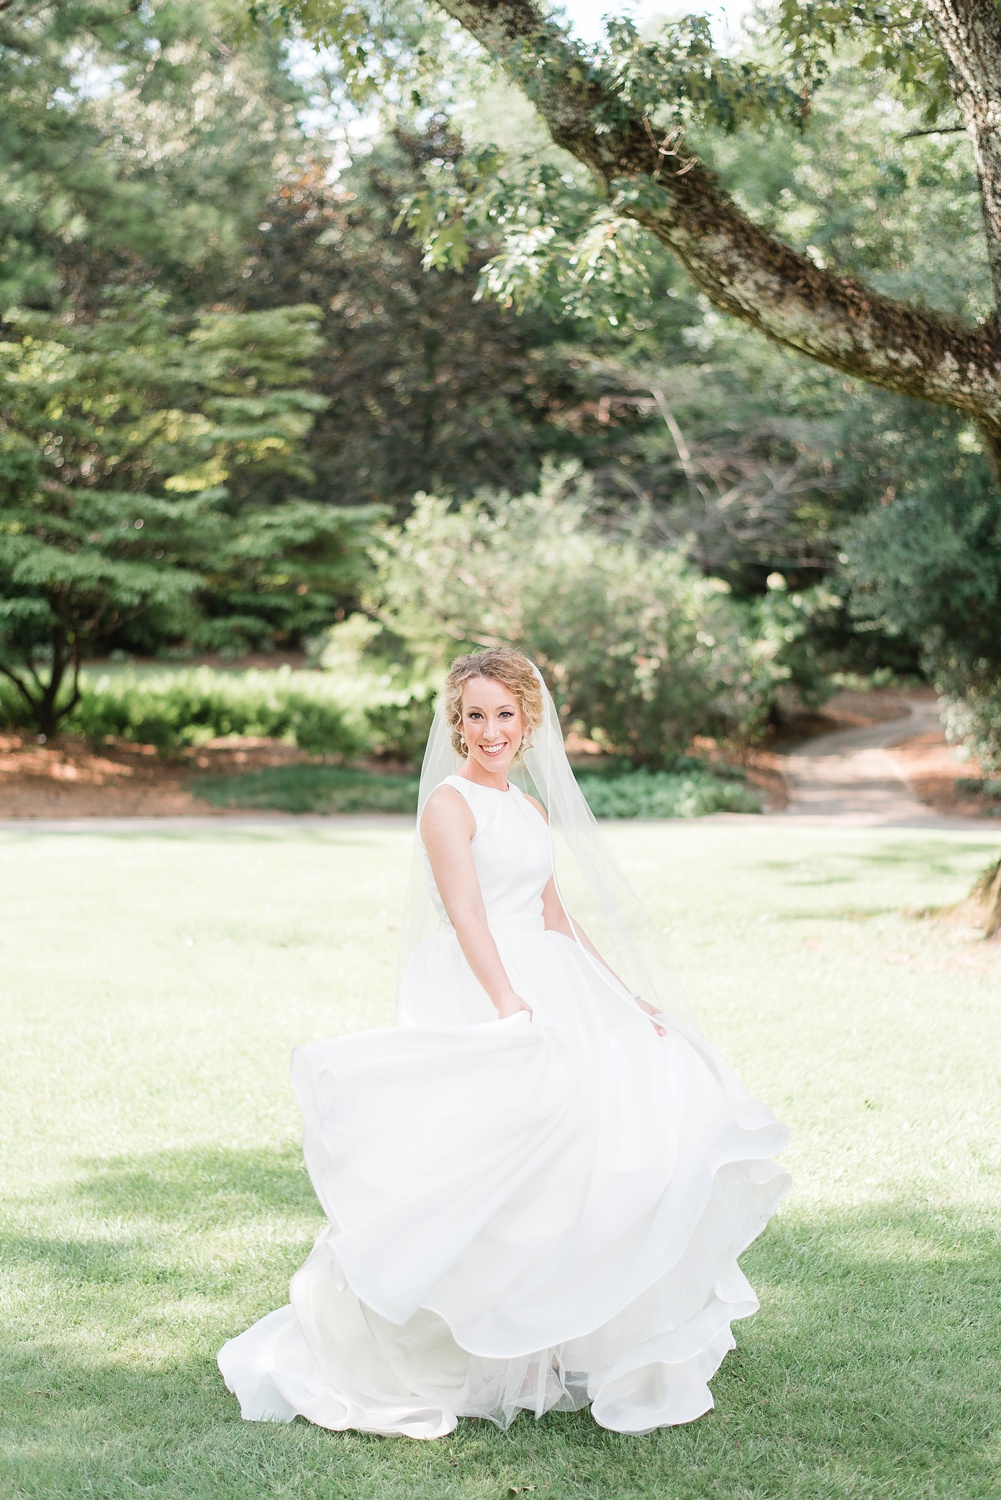 Aldridge Gardens Hoover Alabama Style Me Pretty | Birmingham Alabama Wedding Photographer_0005.jpg